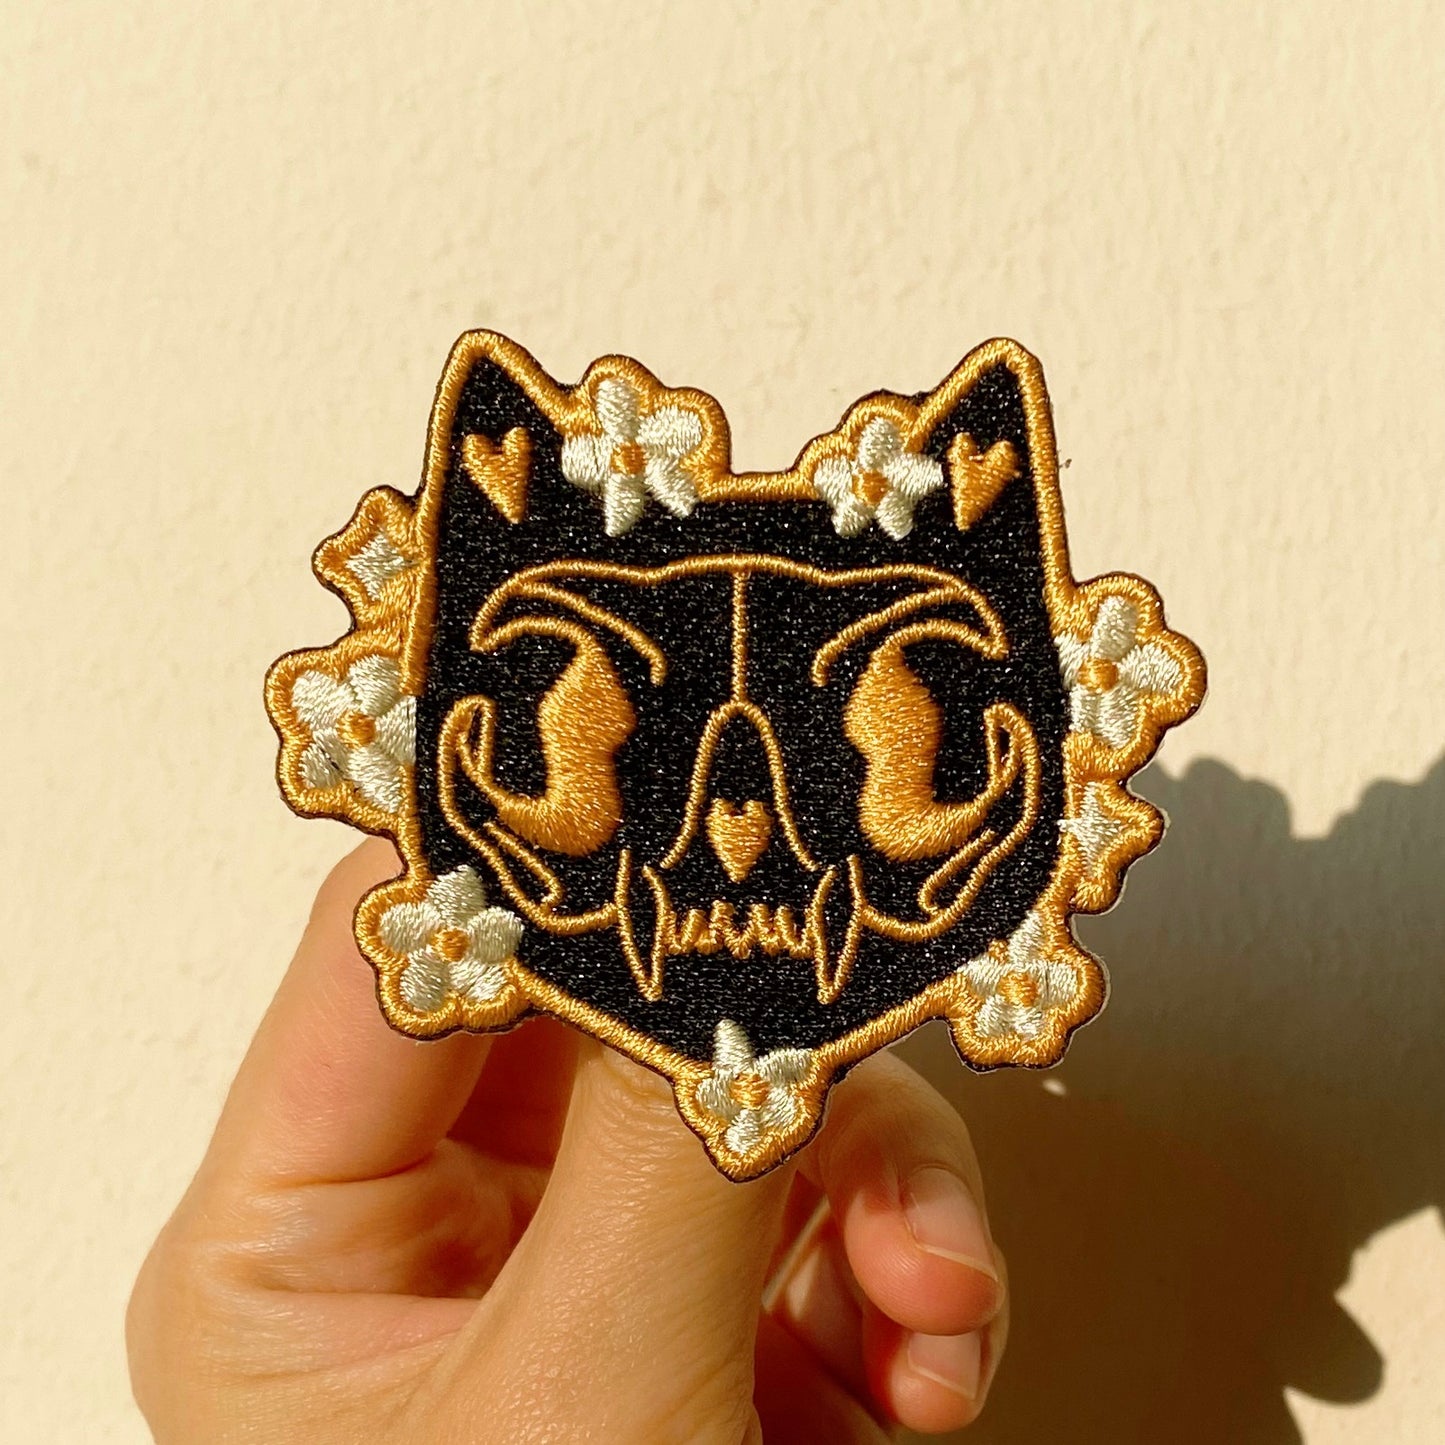 ShinnerCXI Embroidery Pin - Black Cat Skull